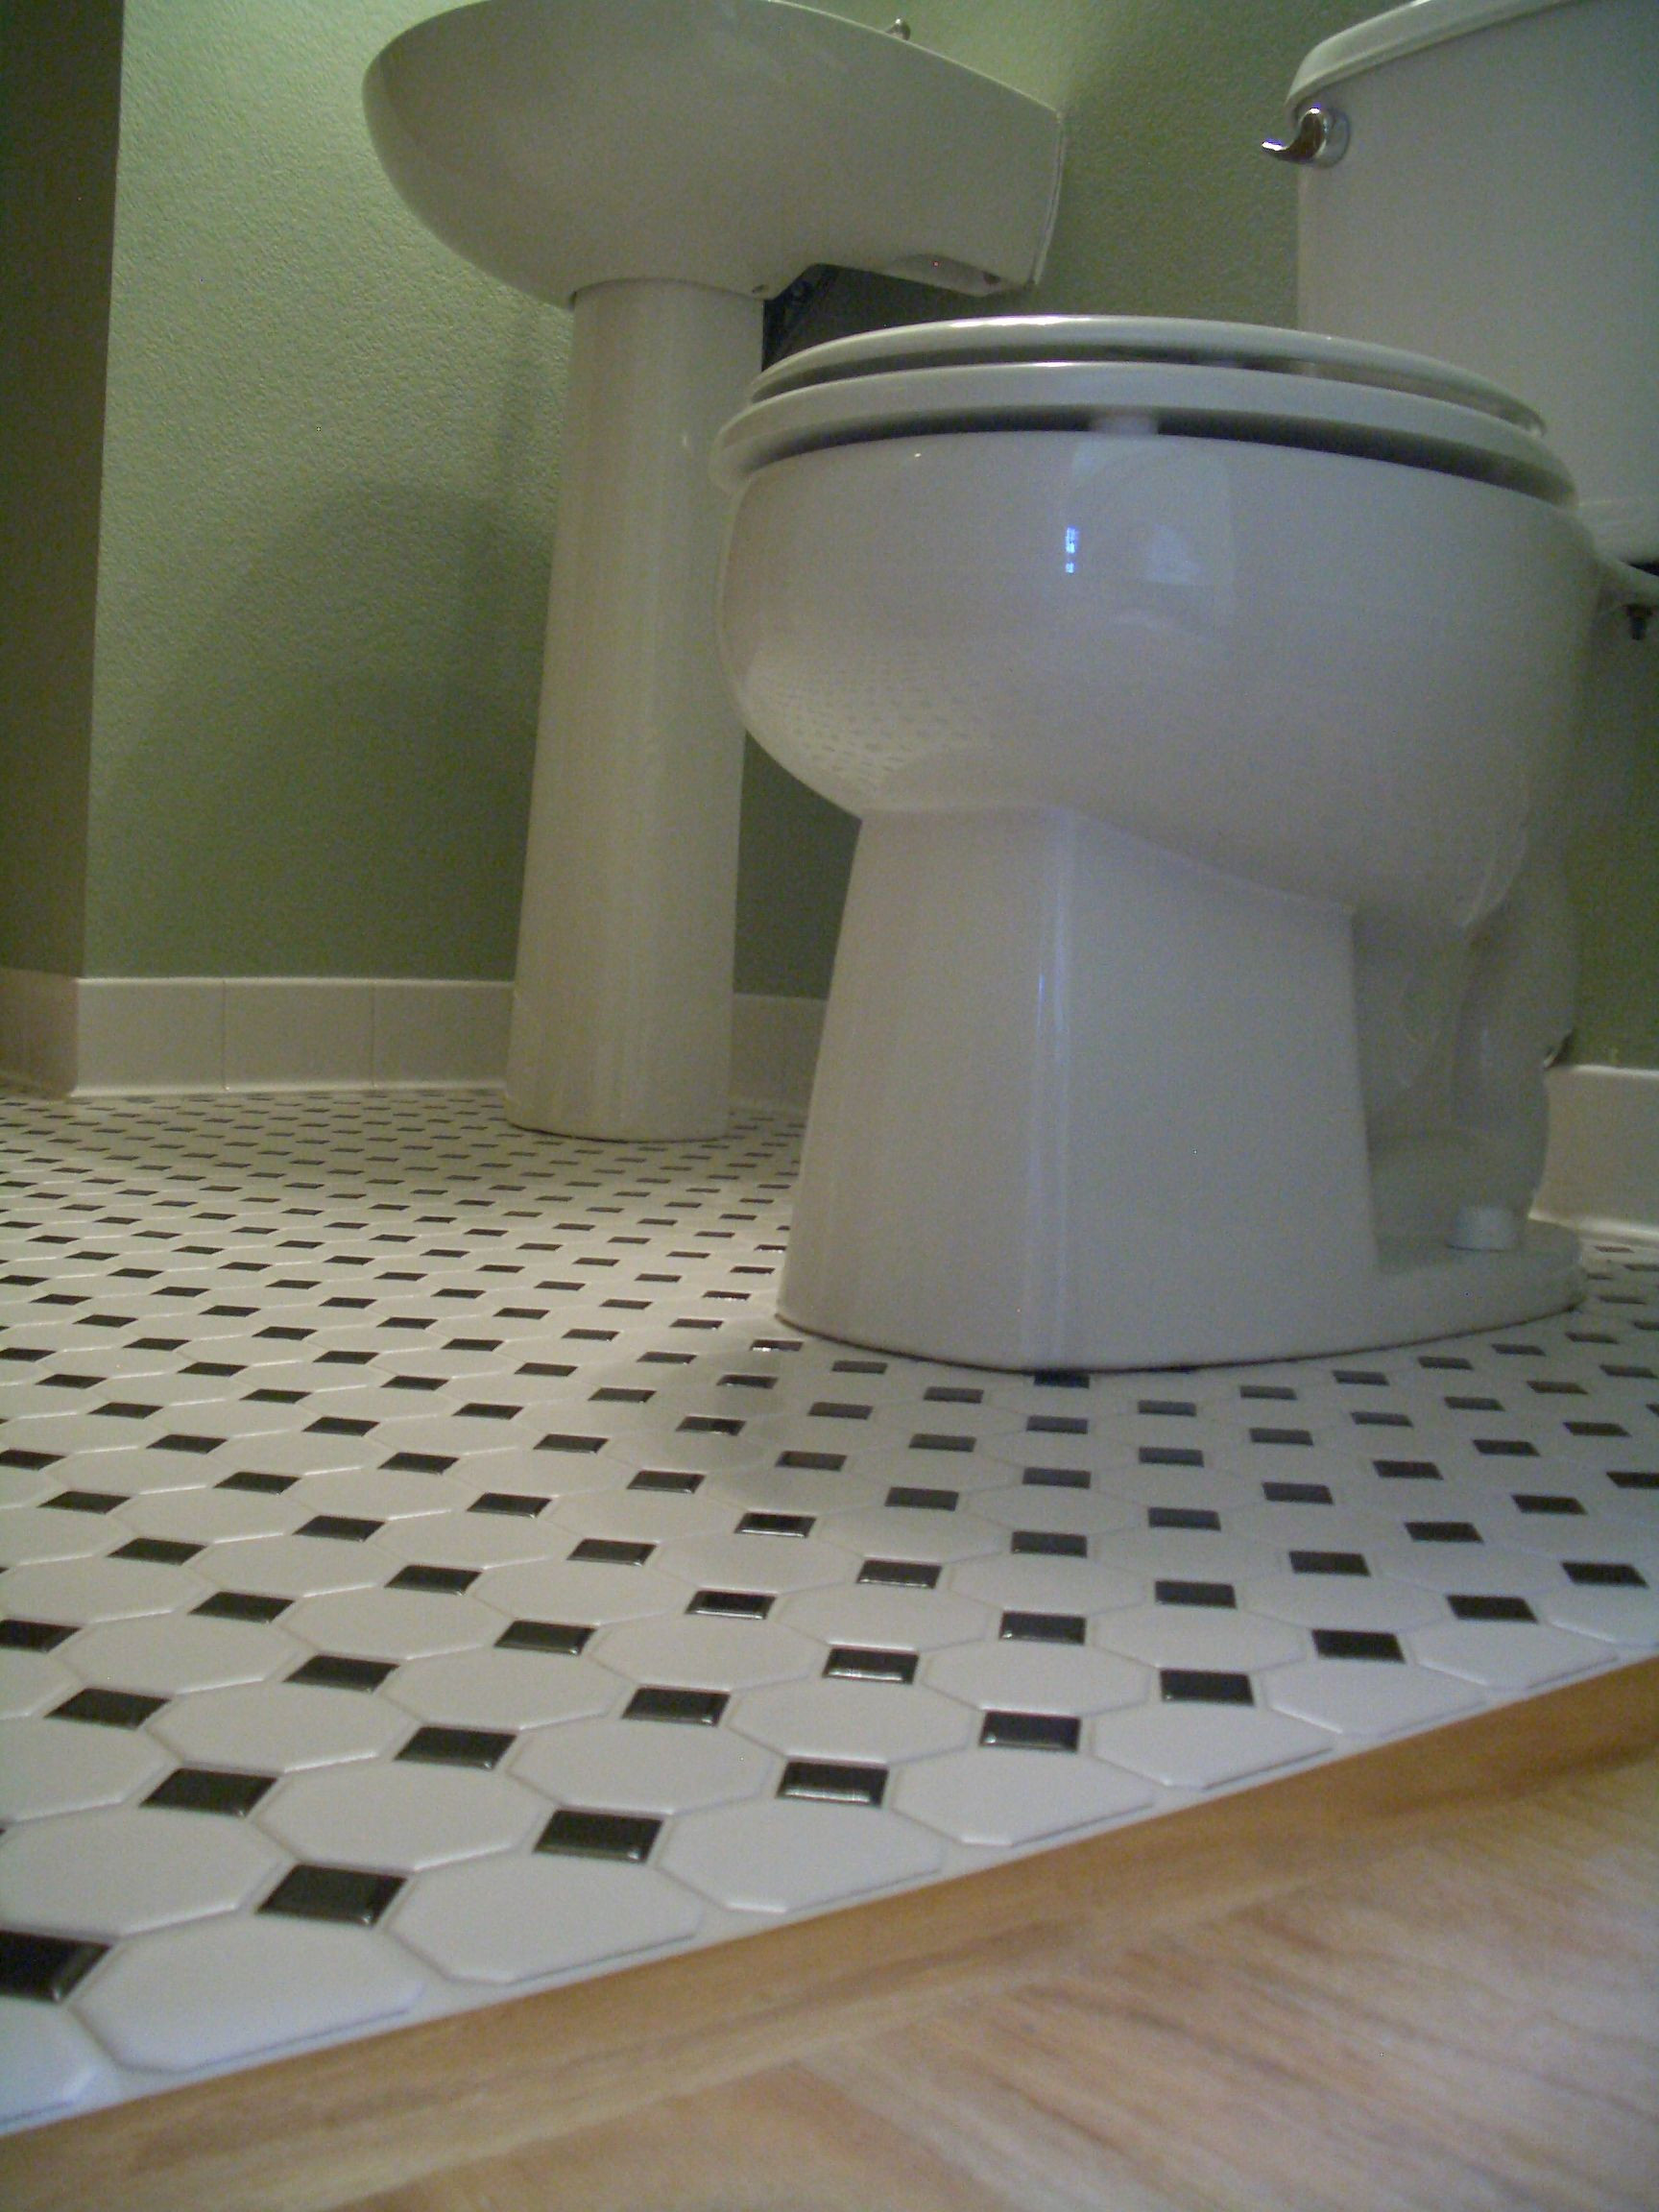 Octagon Tiles Bathroom Floor
 Octagonal mosaic tile floors with black dot